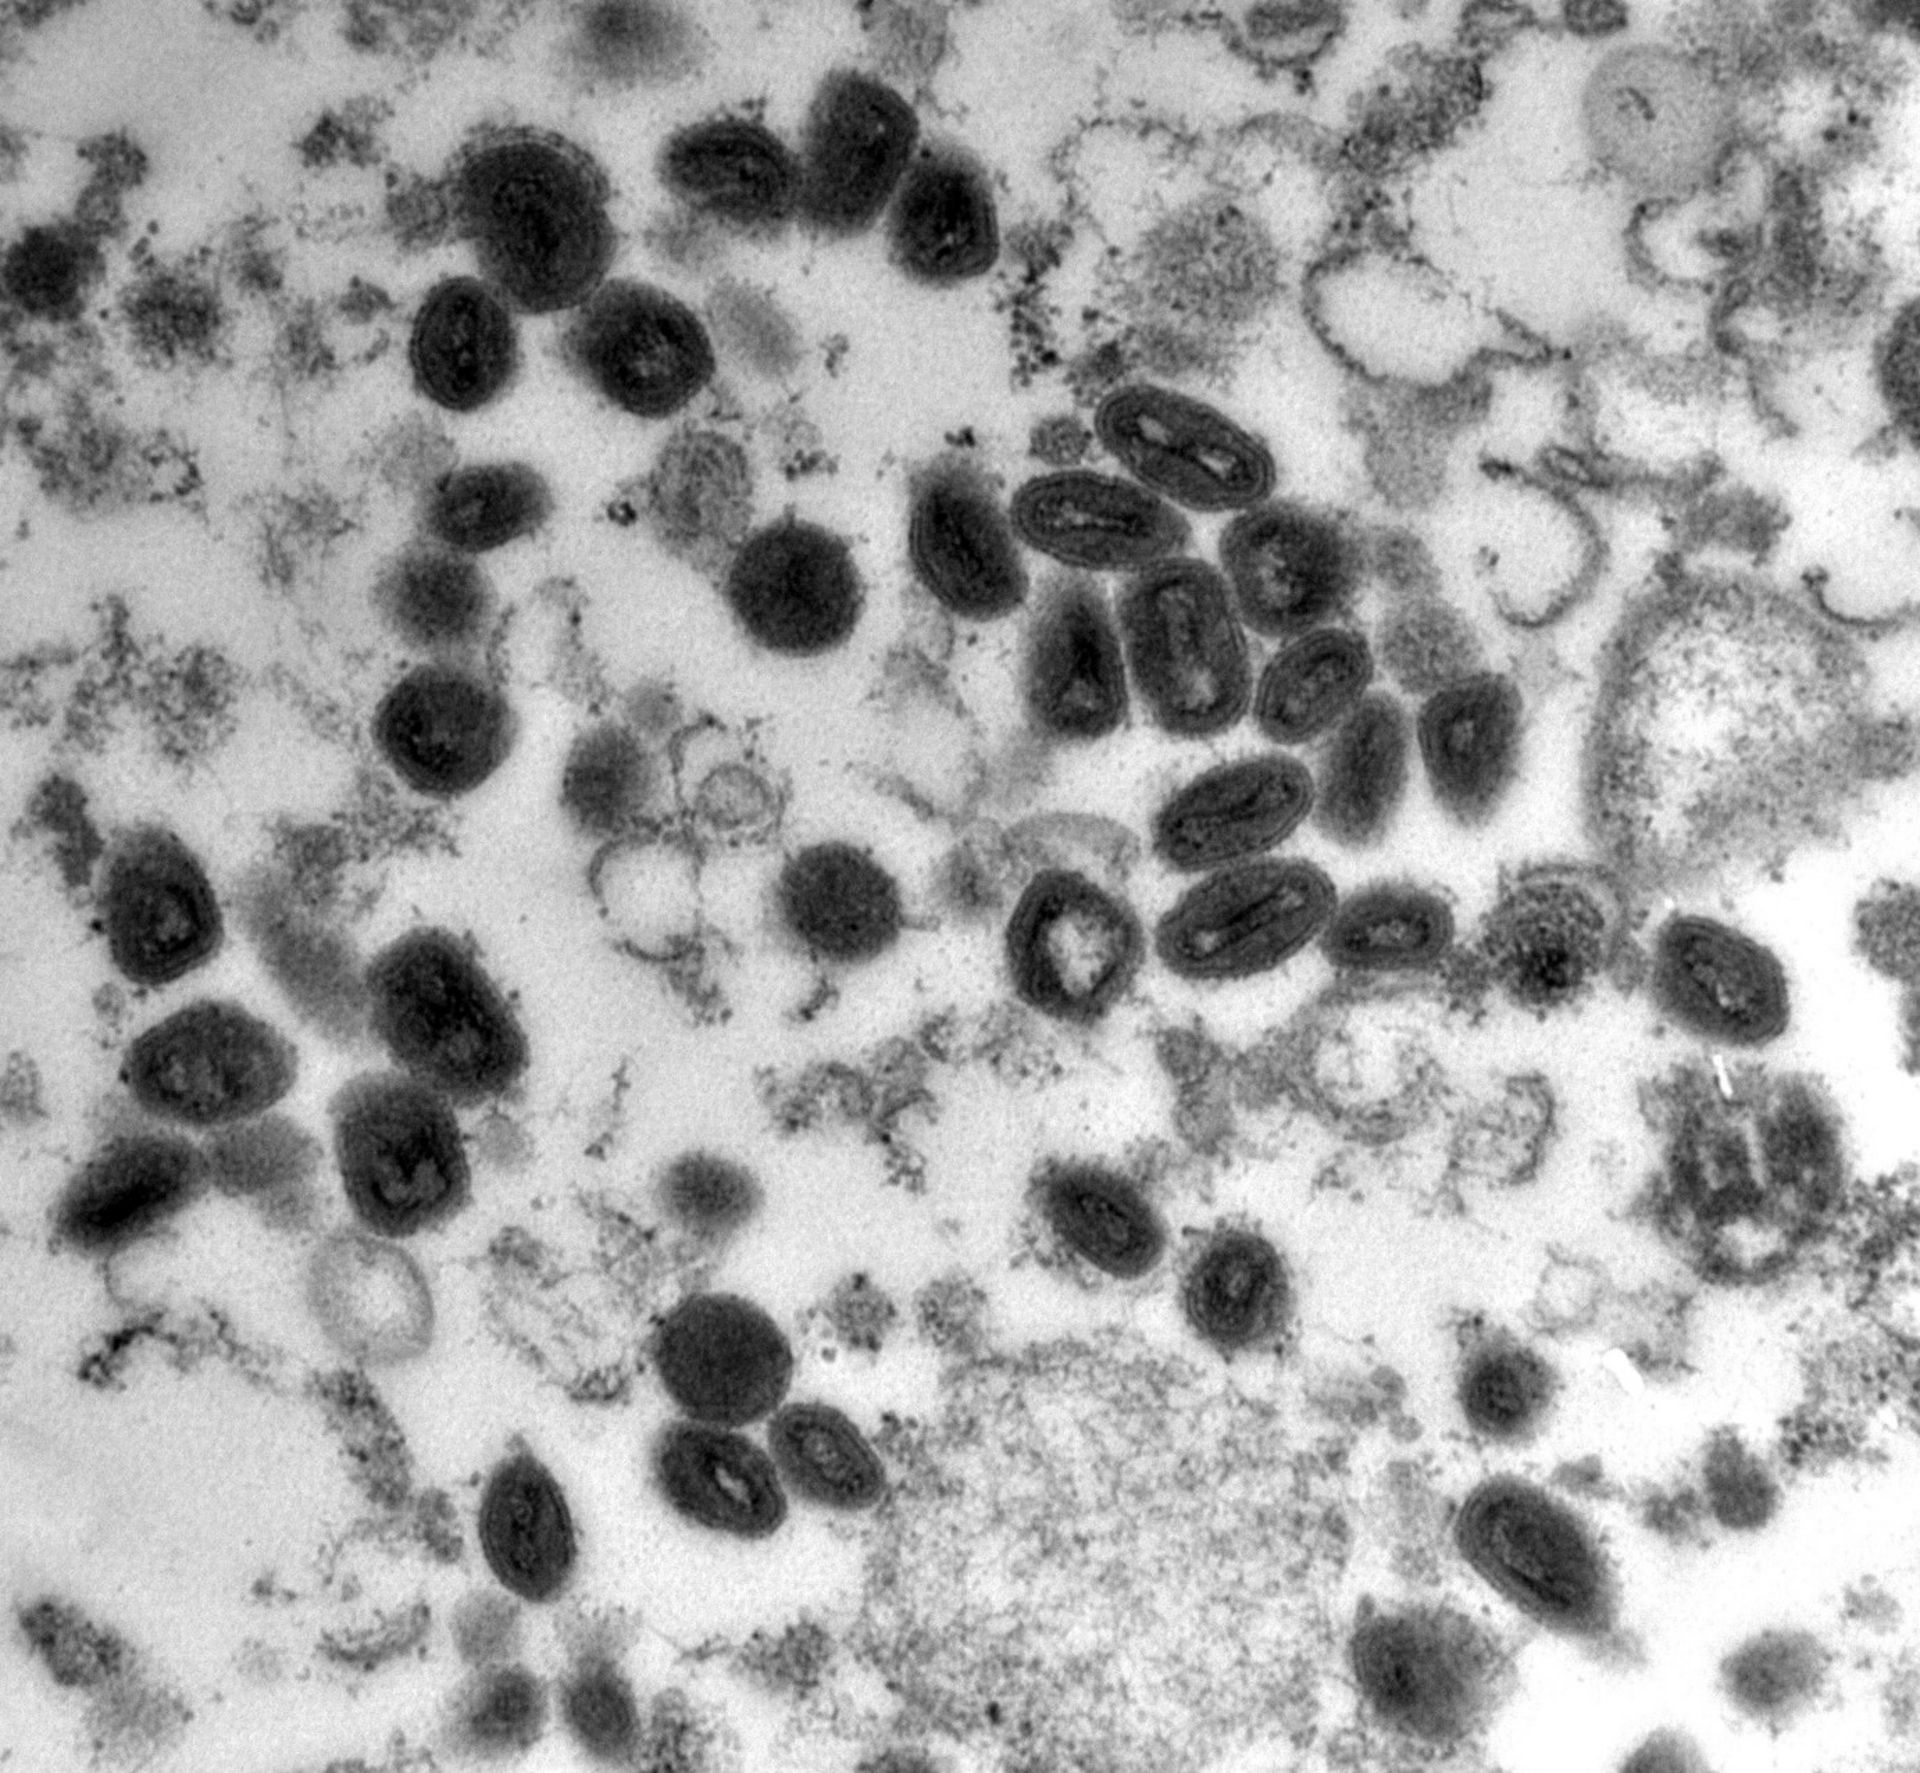 Image of smallpox viruses under the microscope